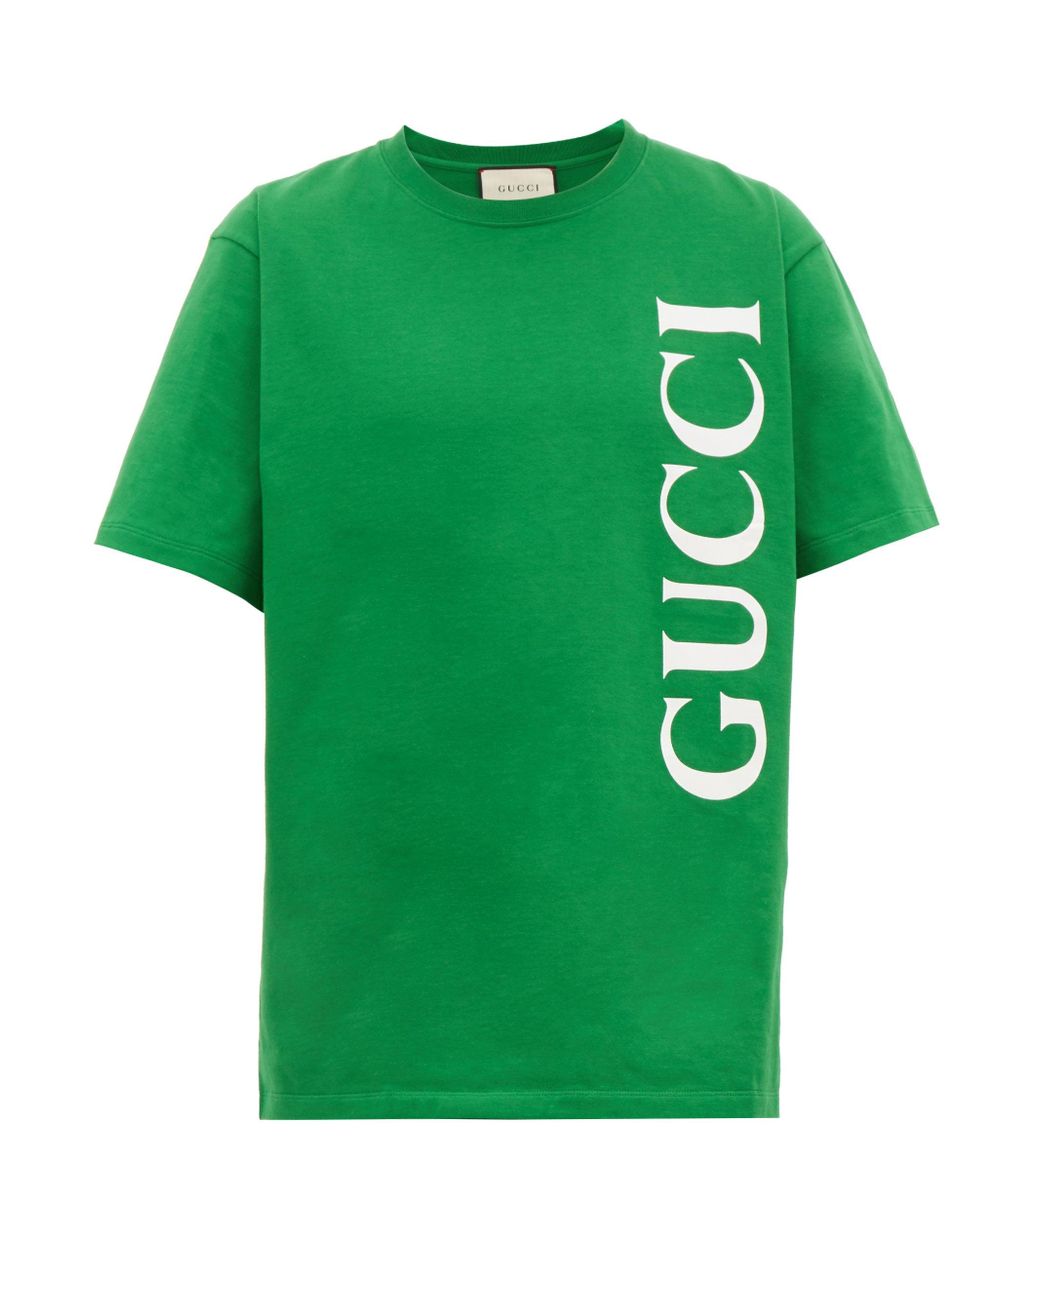 Gucci Vertical Logo Cotton T-shirt in Green for Men - Lyst